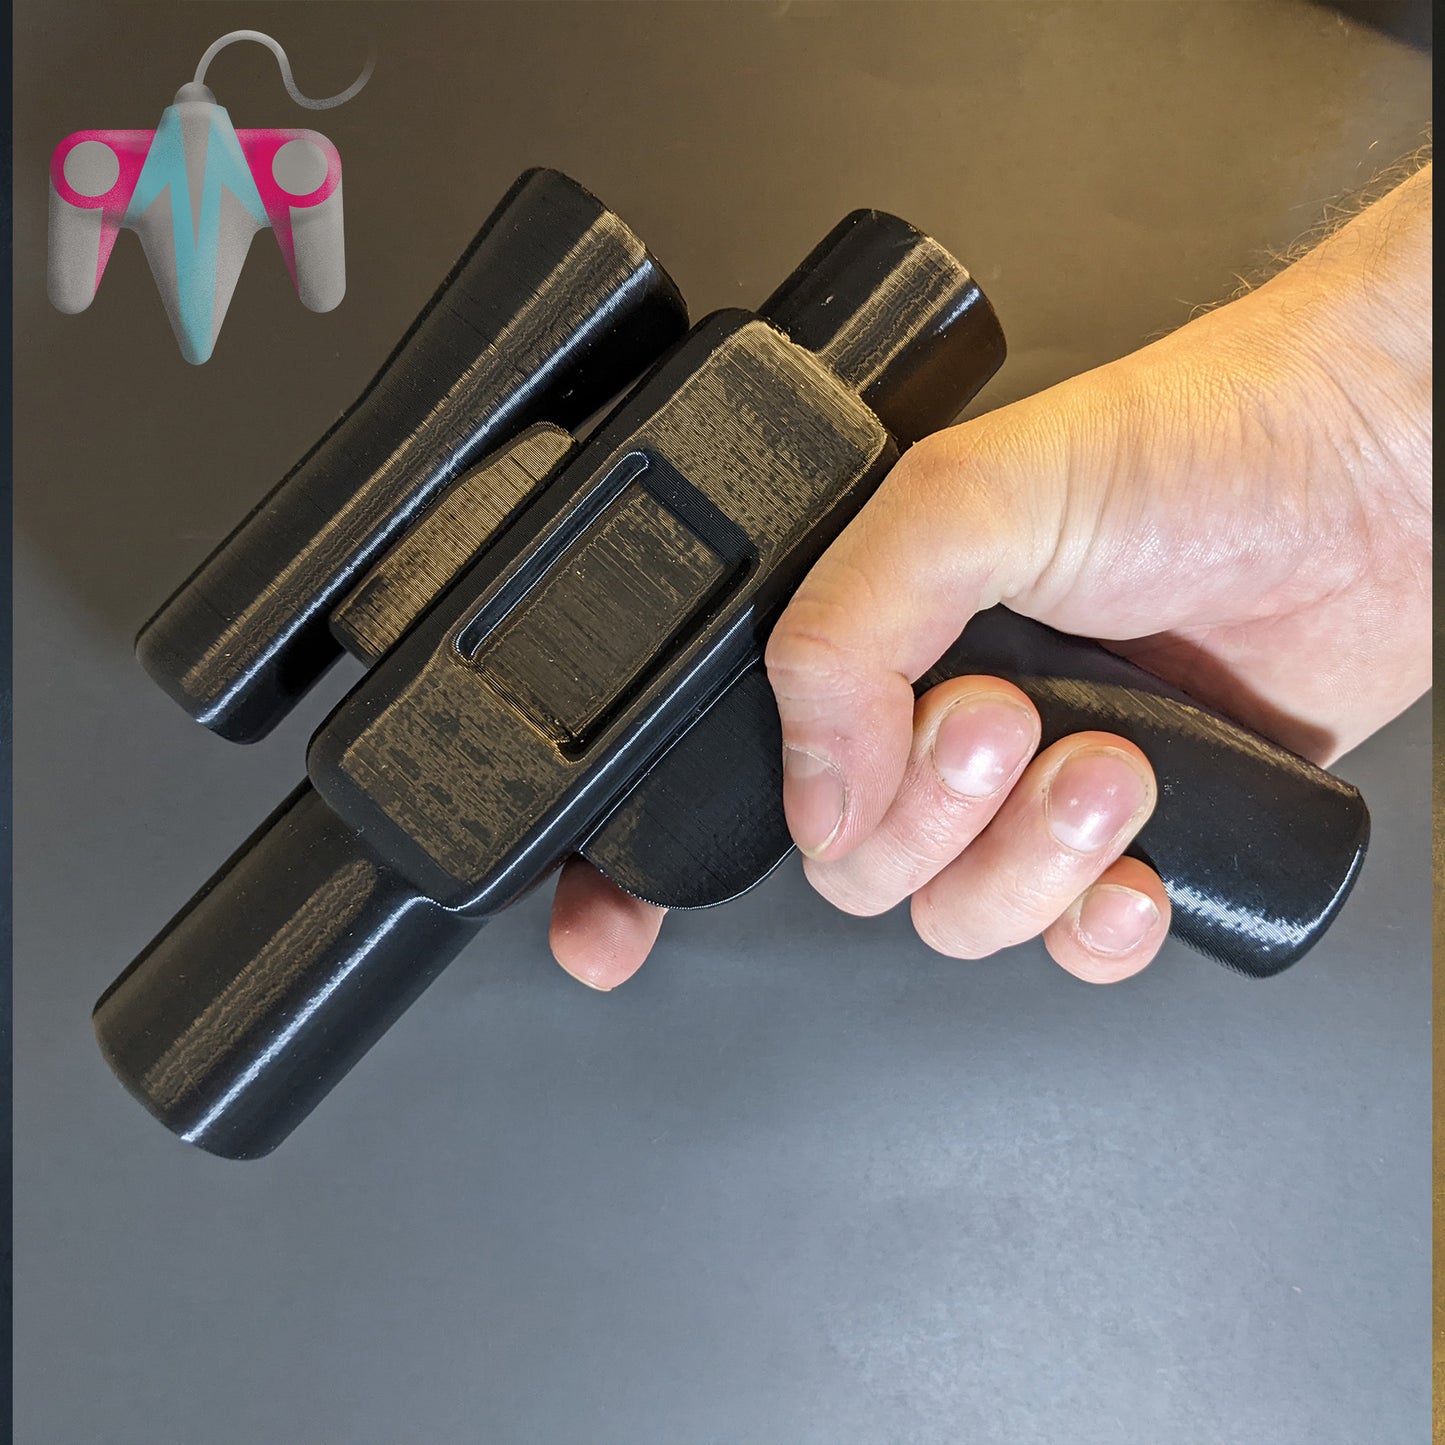 3D Printed Blaster Pistol